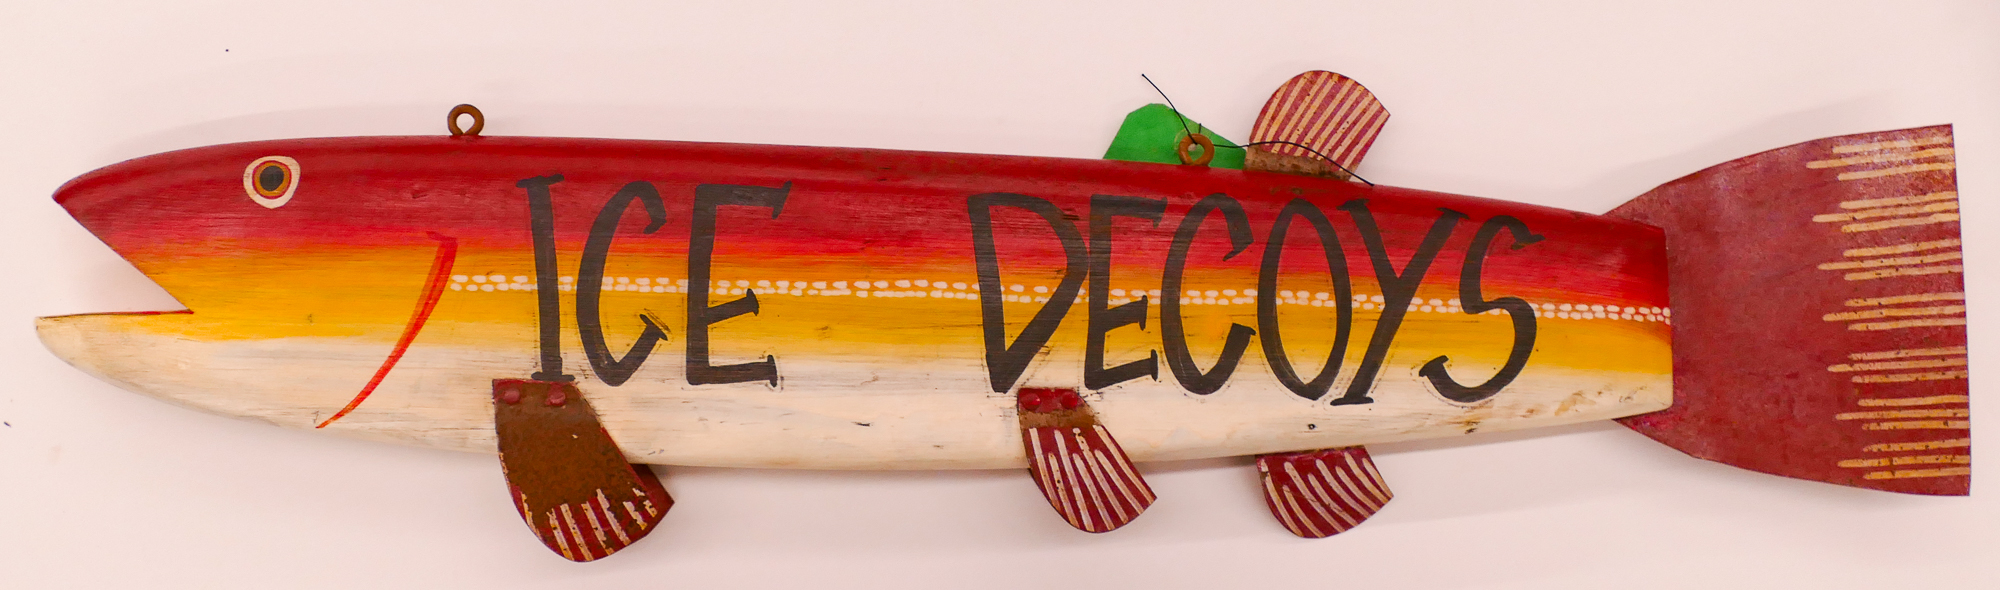 Ice Decoys Fish Decorative Trade Sign-